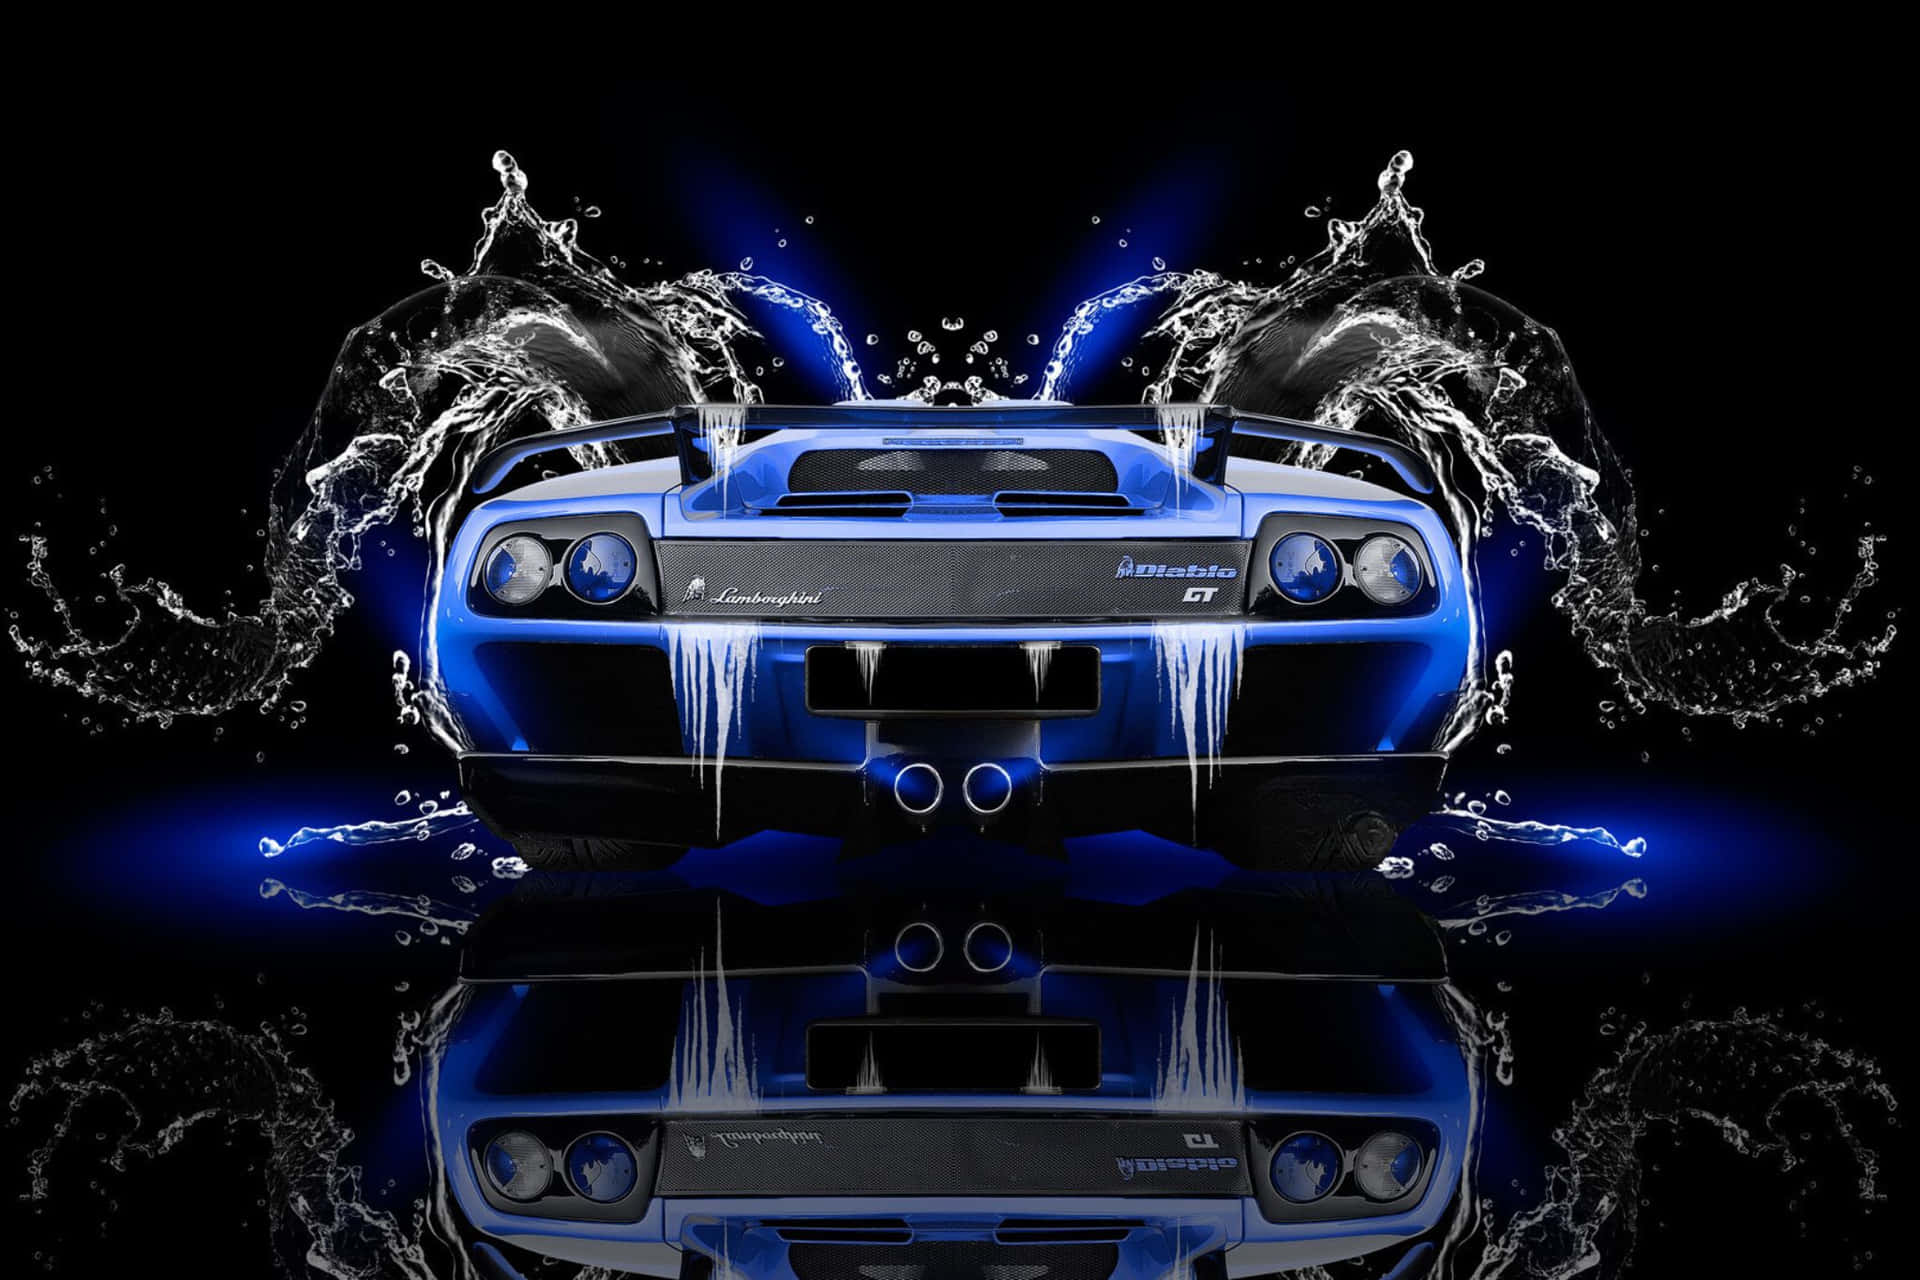 Neon Blue Lamborghini Diablo G T With Water Effects Wallpaper